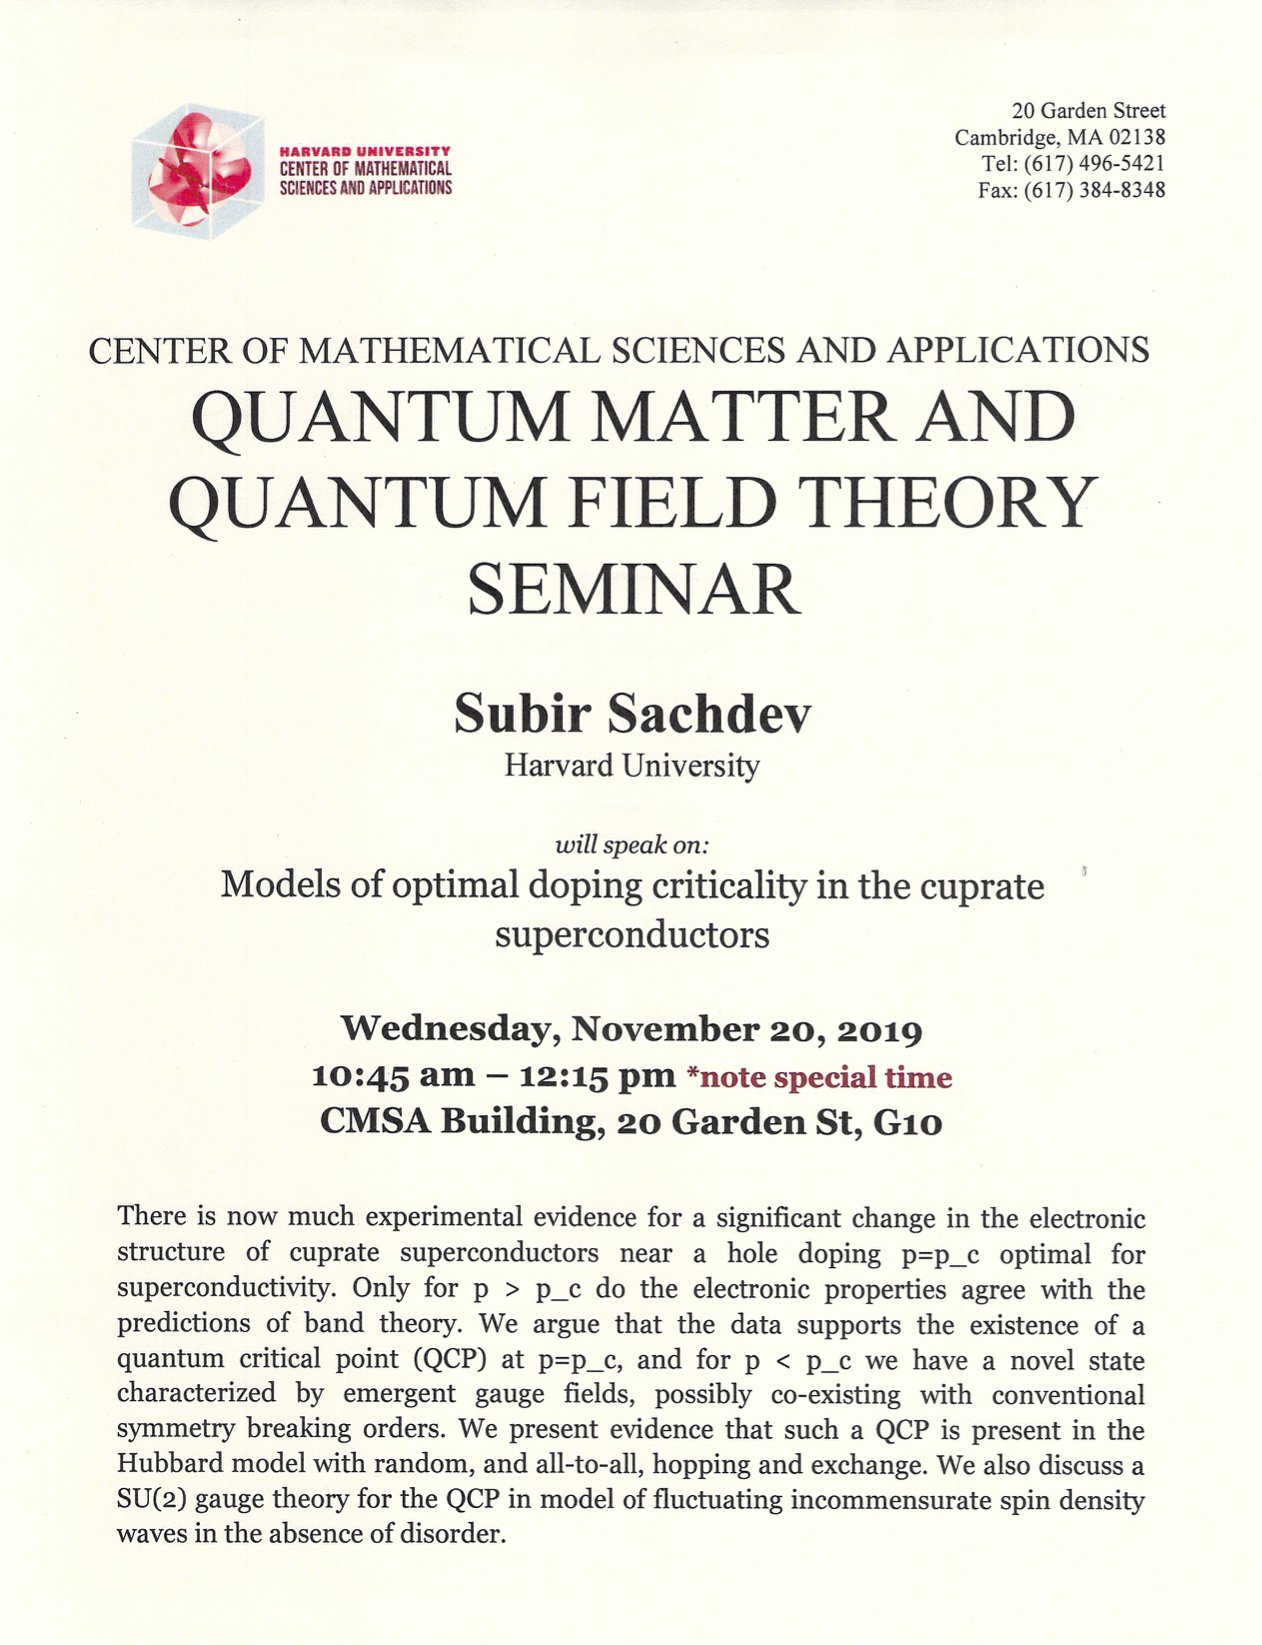 11/20/2019 Quantum Matter Seminar